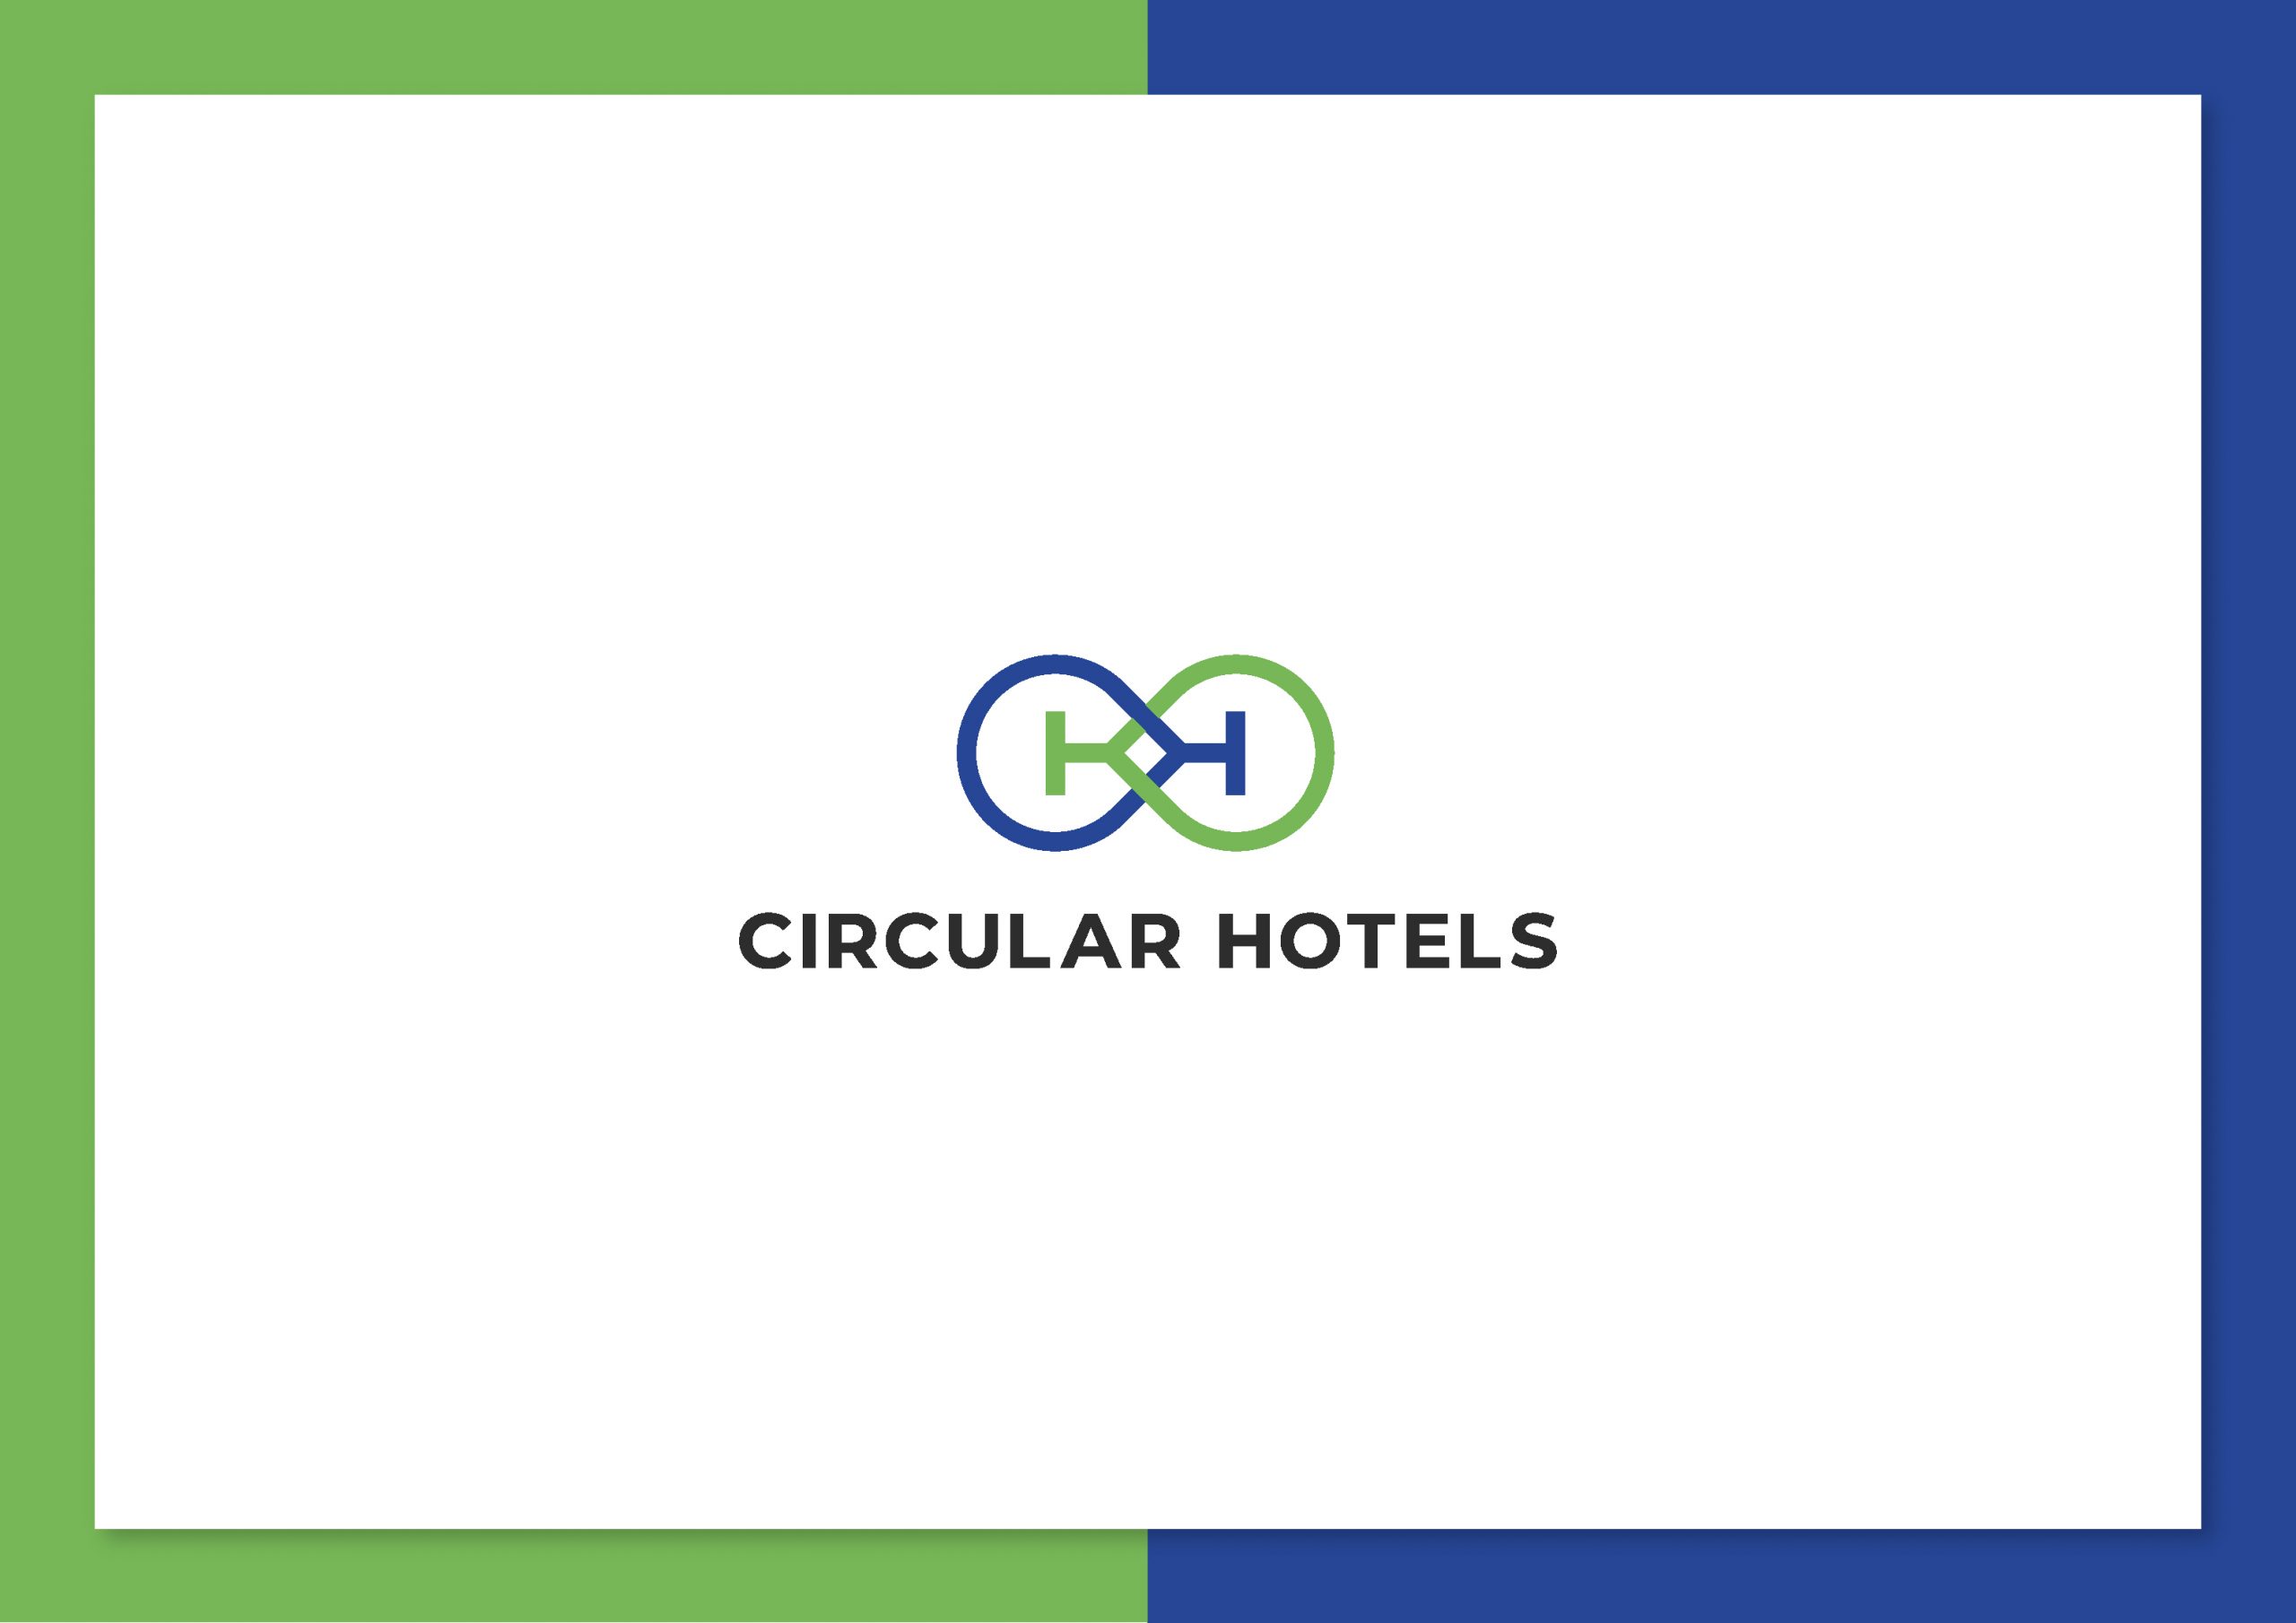 Circular Hotels